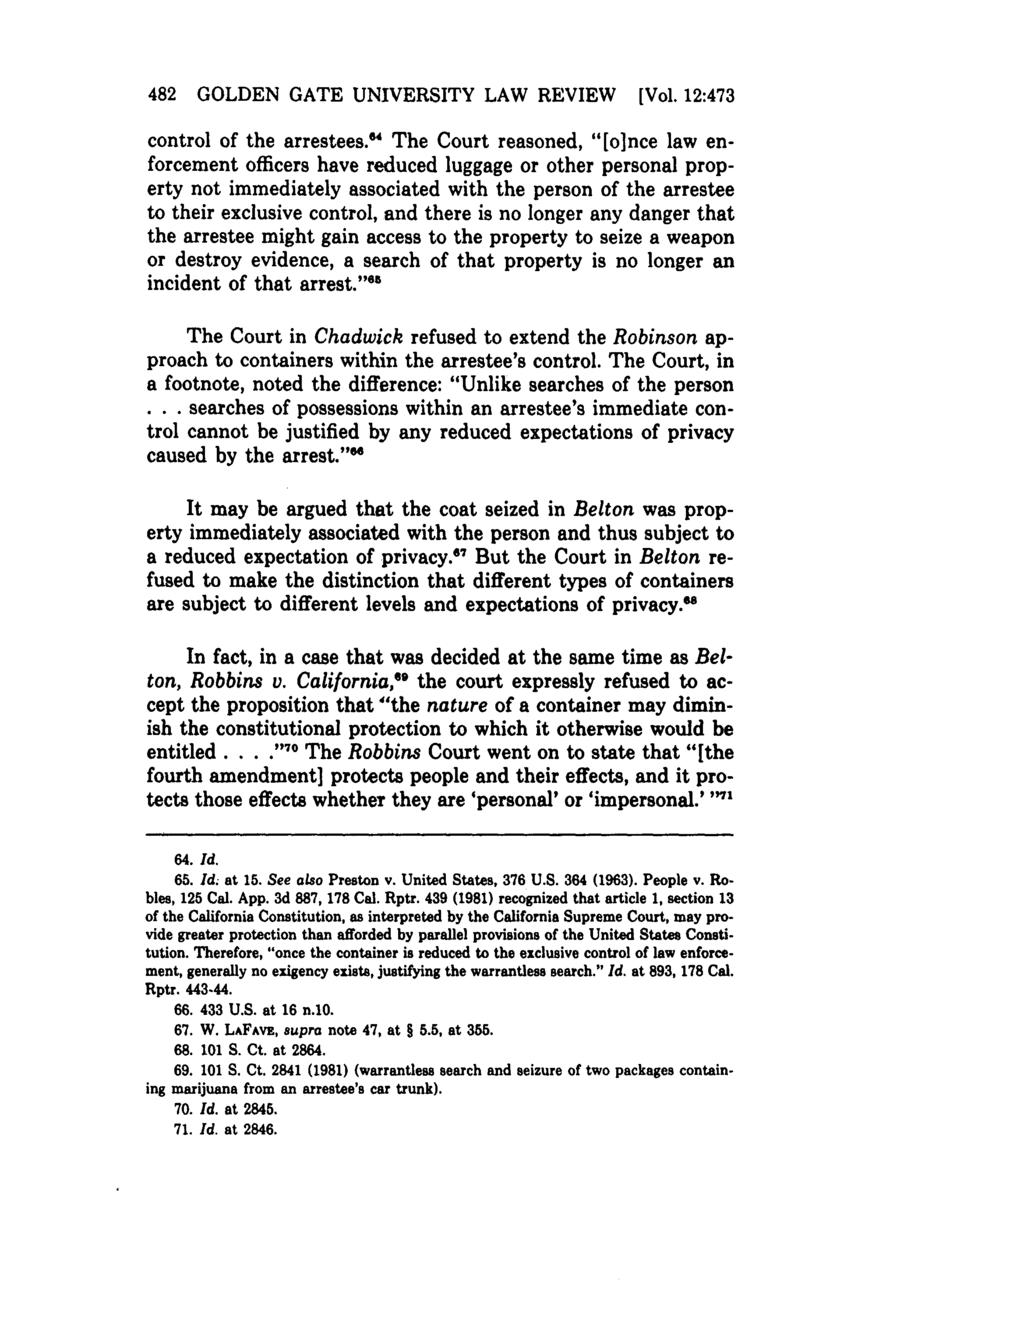 Golden Gate University Law Review, Vol. 12, Iss. 2 [1982], Art. 6 482 GOLDEN GATE UNIVERSITY LAW REVIEW [Vol. 12:473 control of the arrestees.